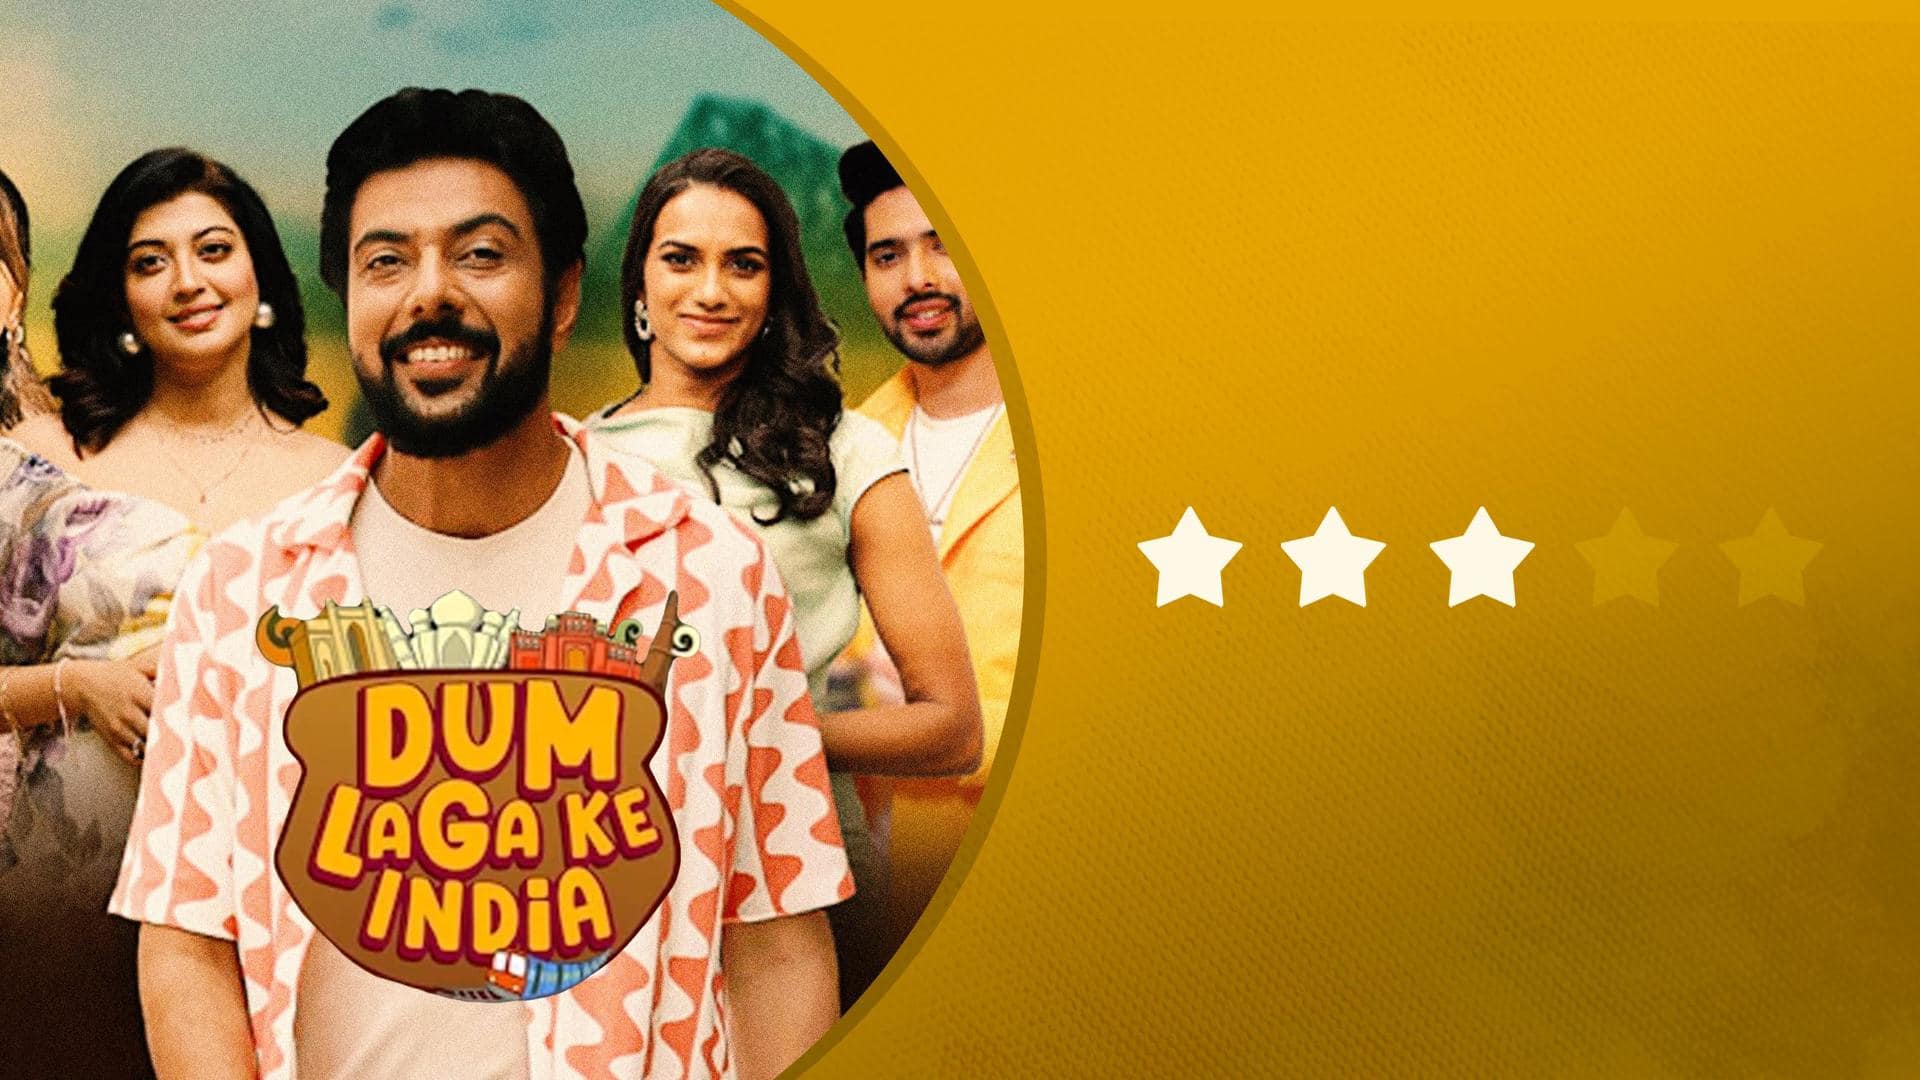 Review: Despite potential, Hotstar's 'Dum Laga Ke India' seems undercooked